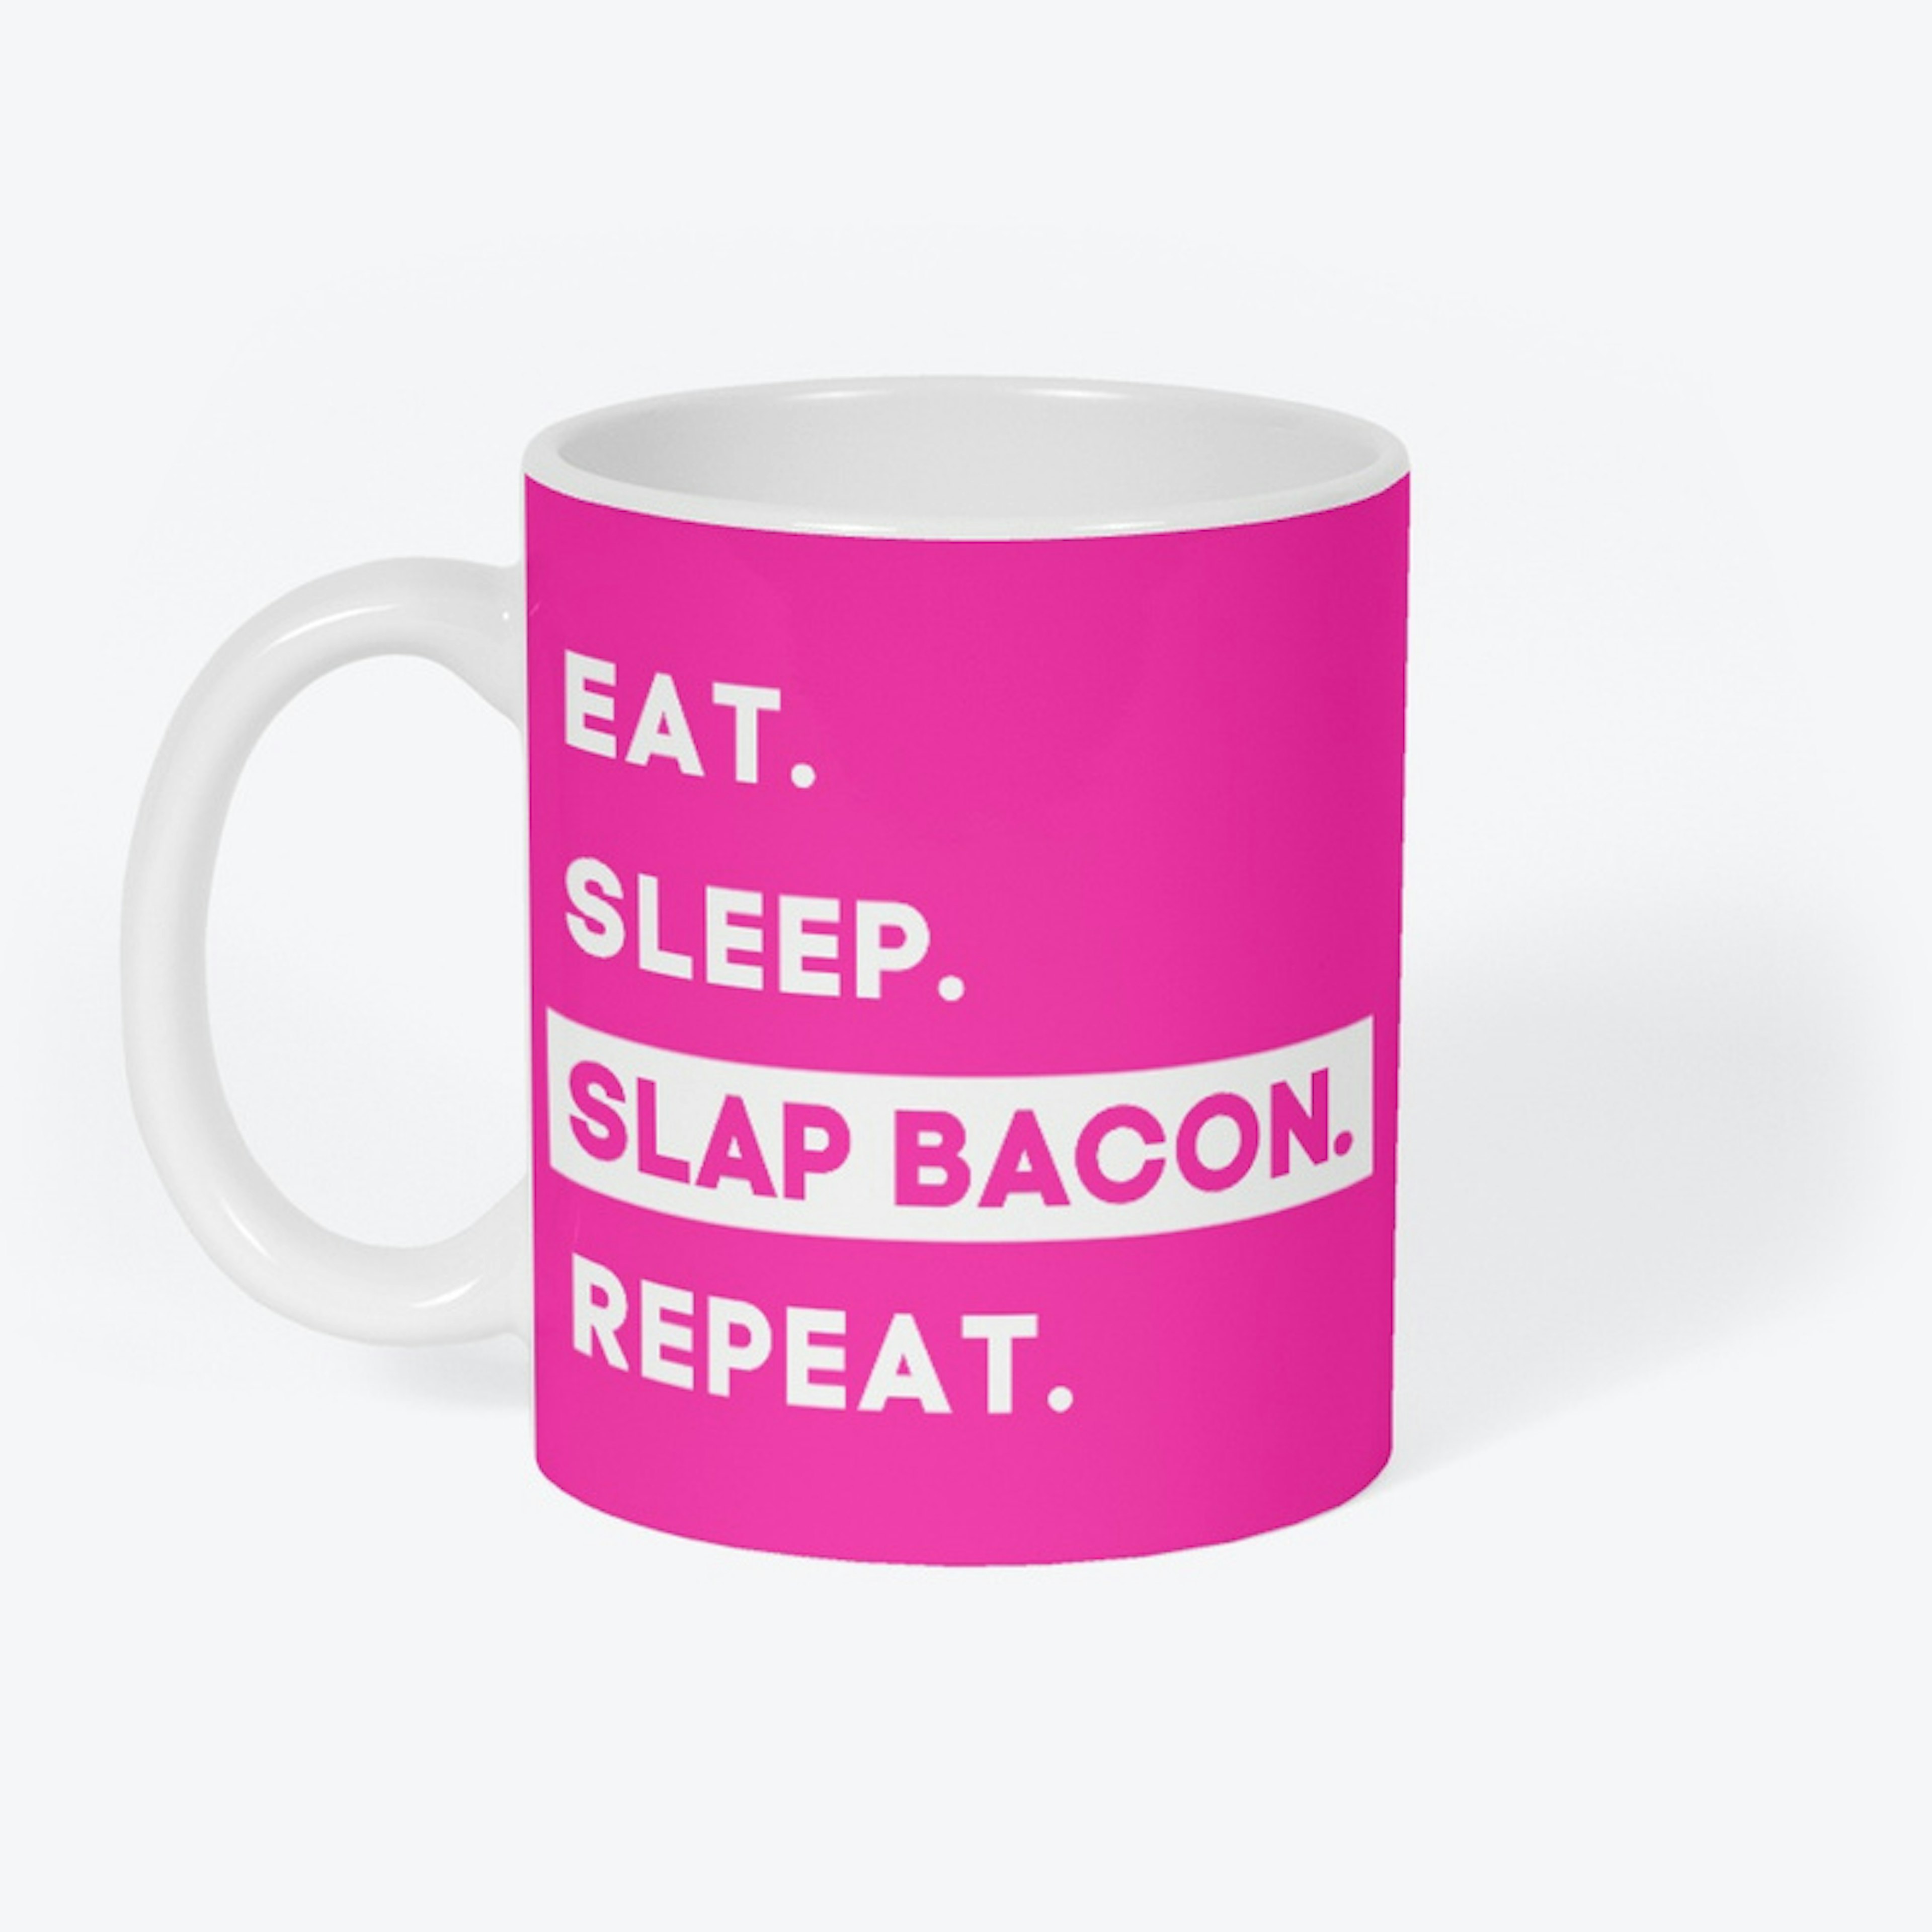 Slap Bacon.